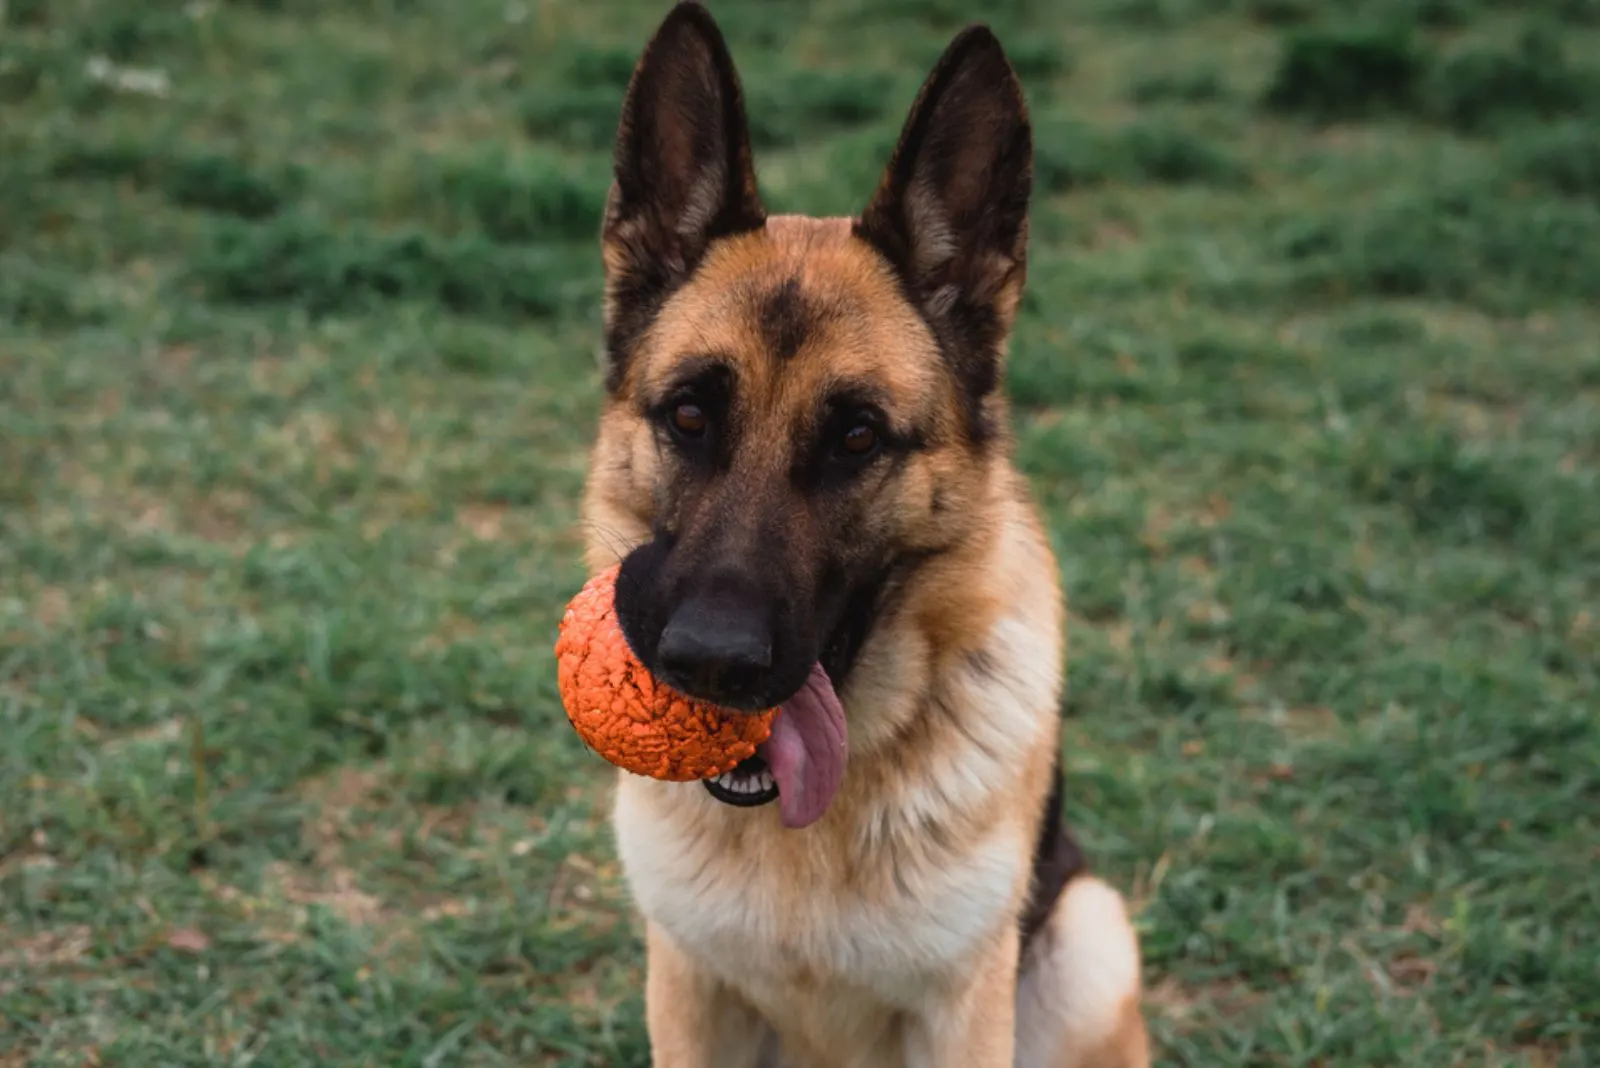 German shepherd with a ball